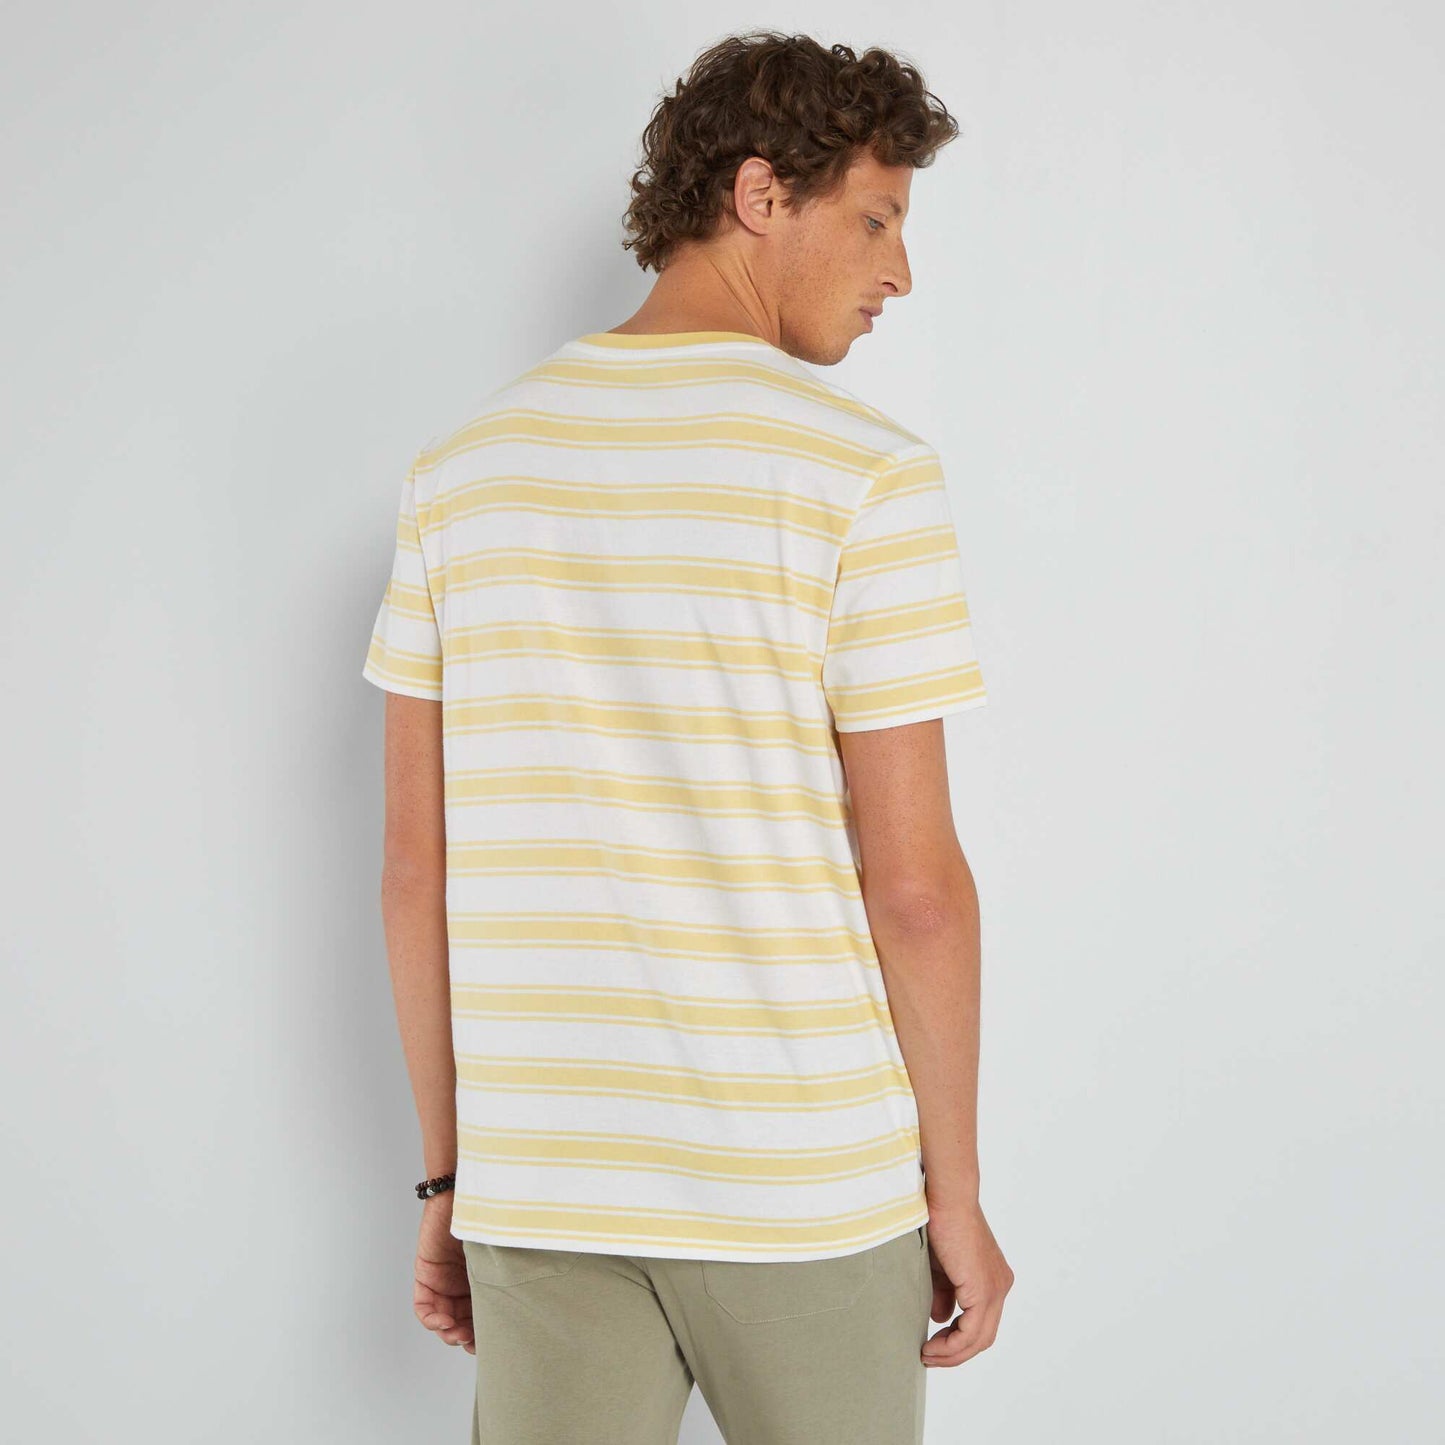 Striped jersey T-shirt gold yellow